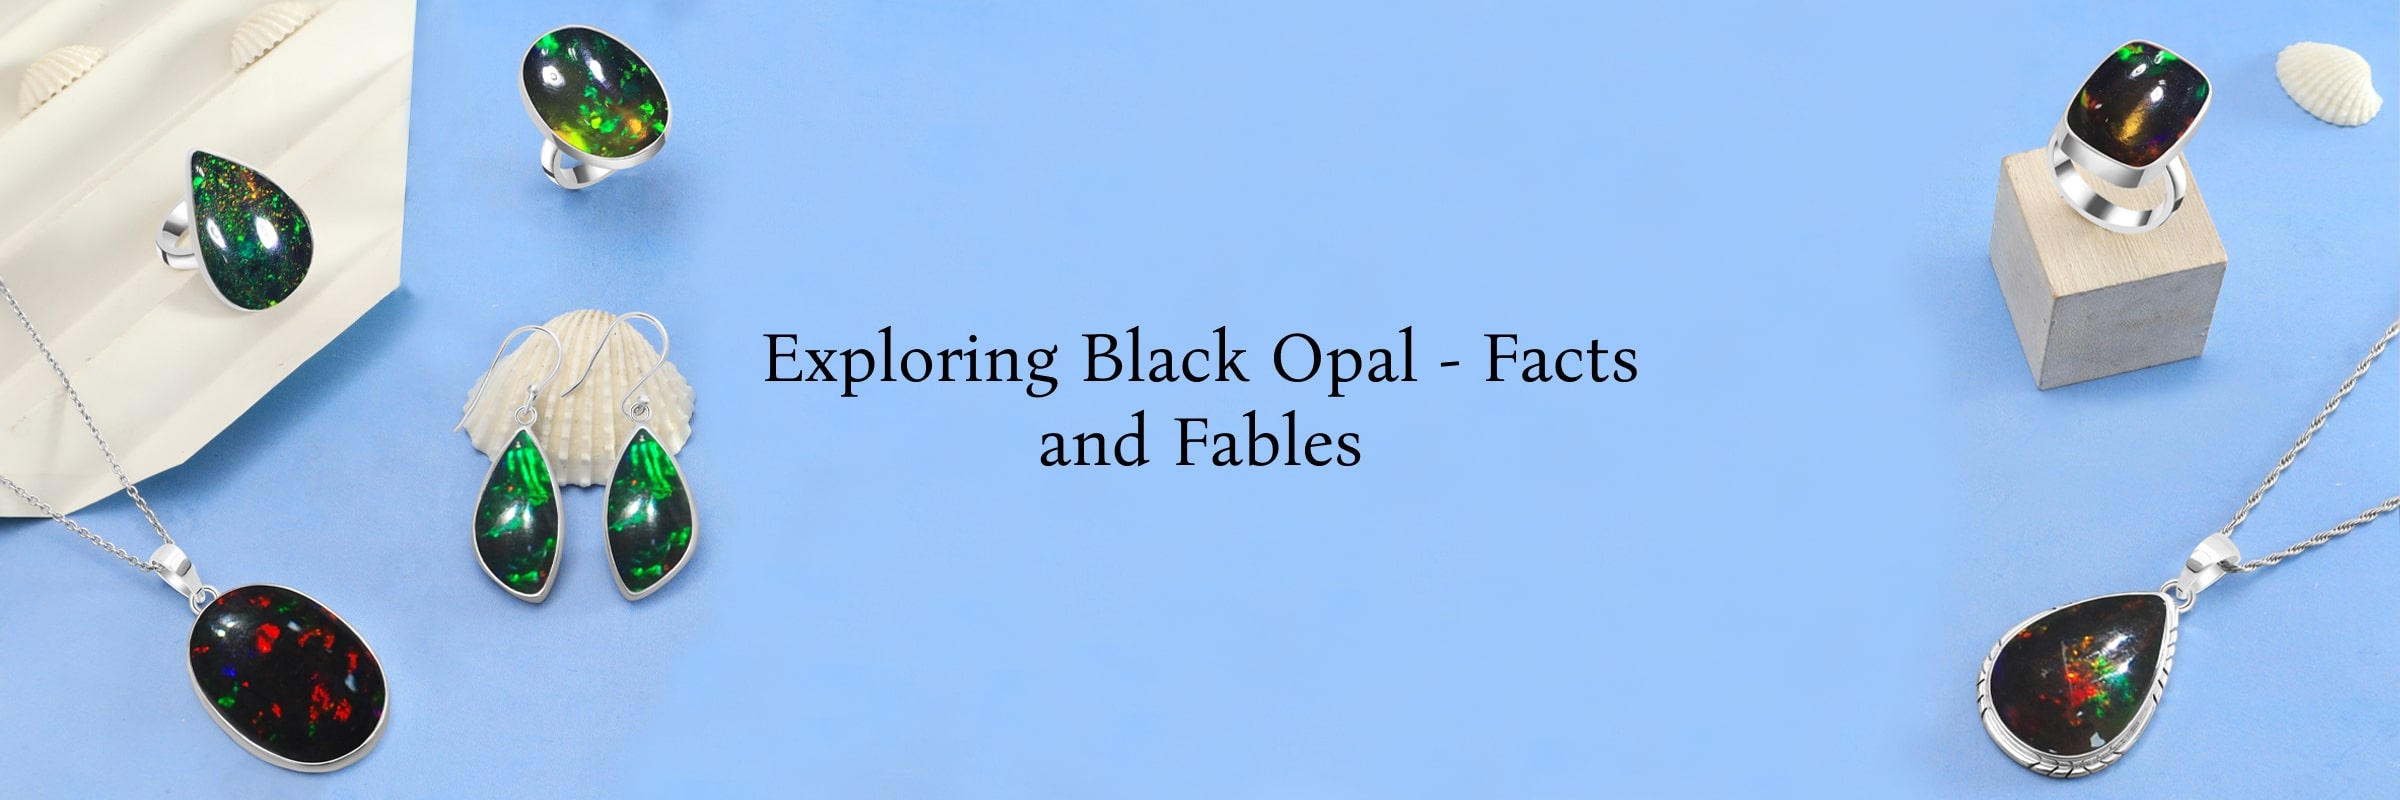 Black Opal Facts